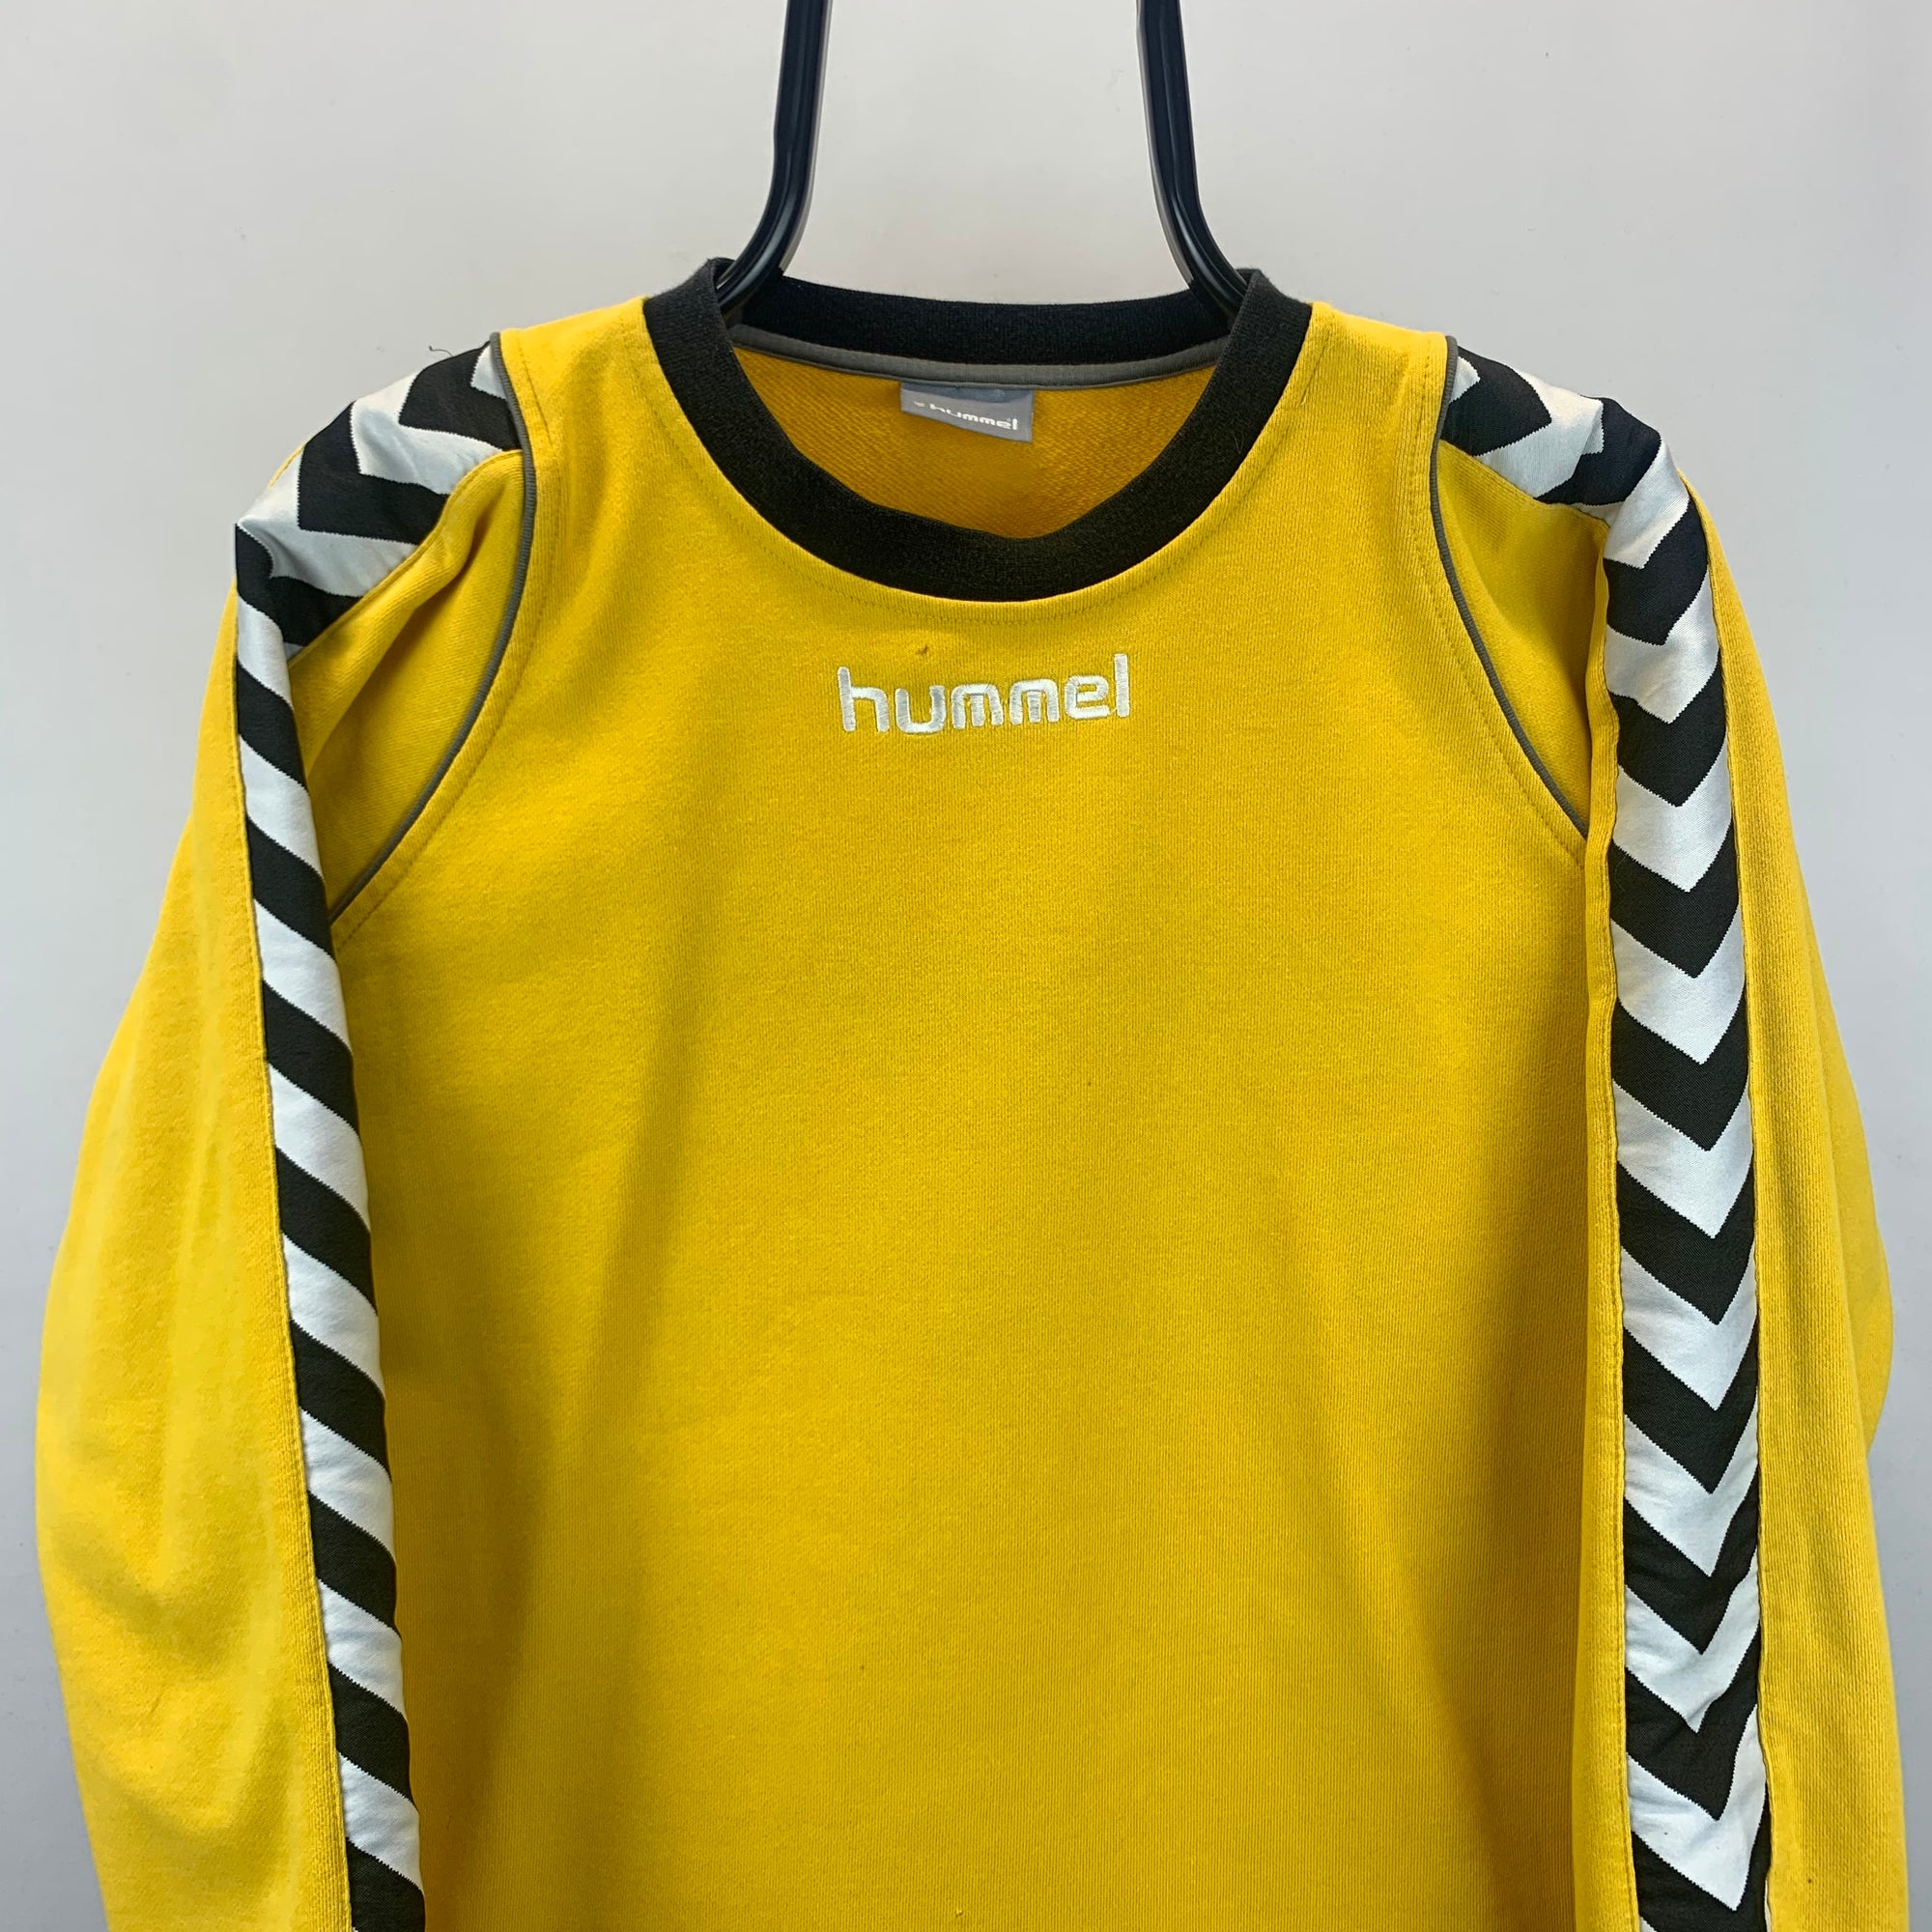 Vintage Hummel Small Spellout Sweatshirt in Yellow/Black - Men's Medium/Women's Large